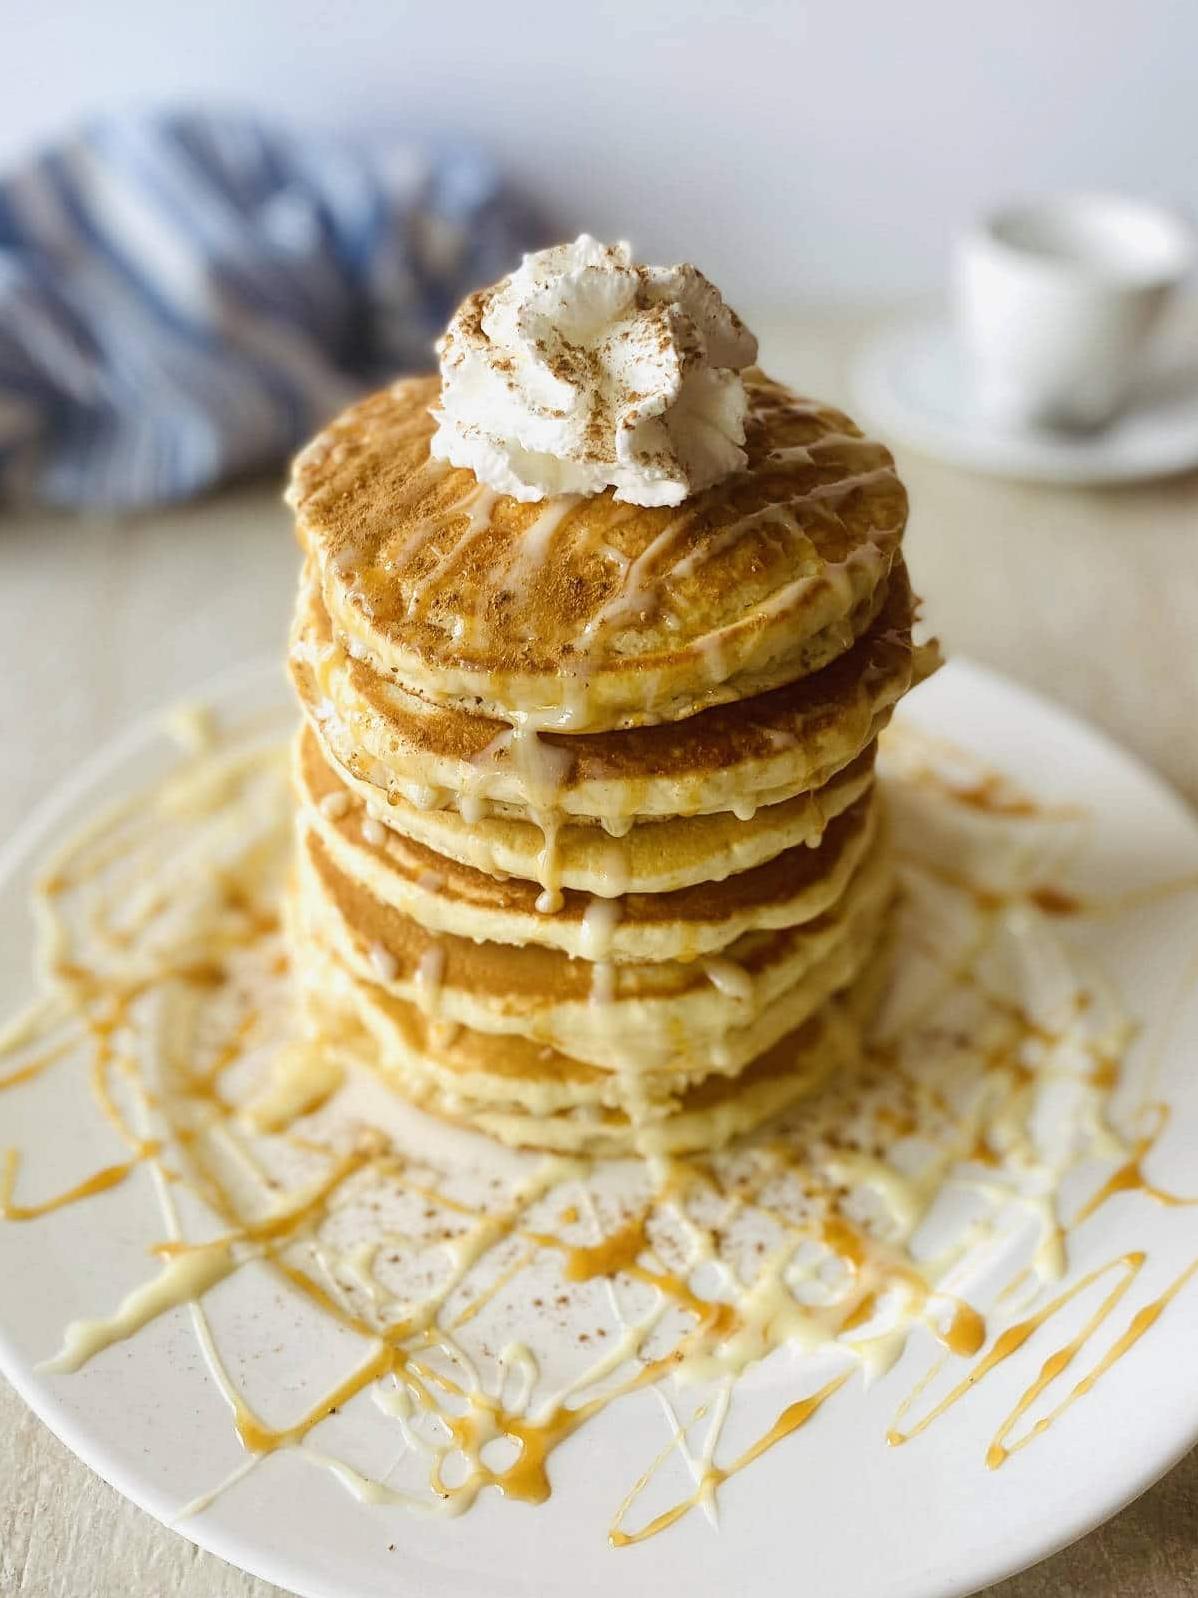  The ultimate breakfast comfort food: Dulce de Leche pancakes